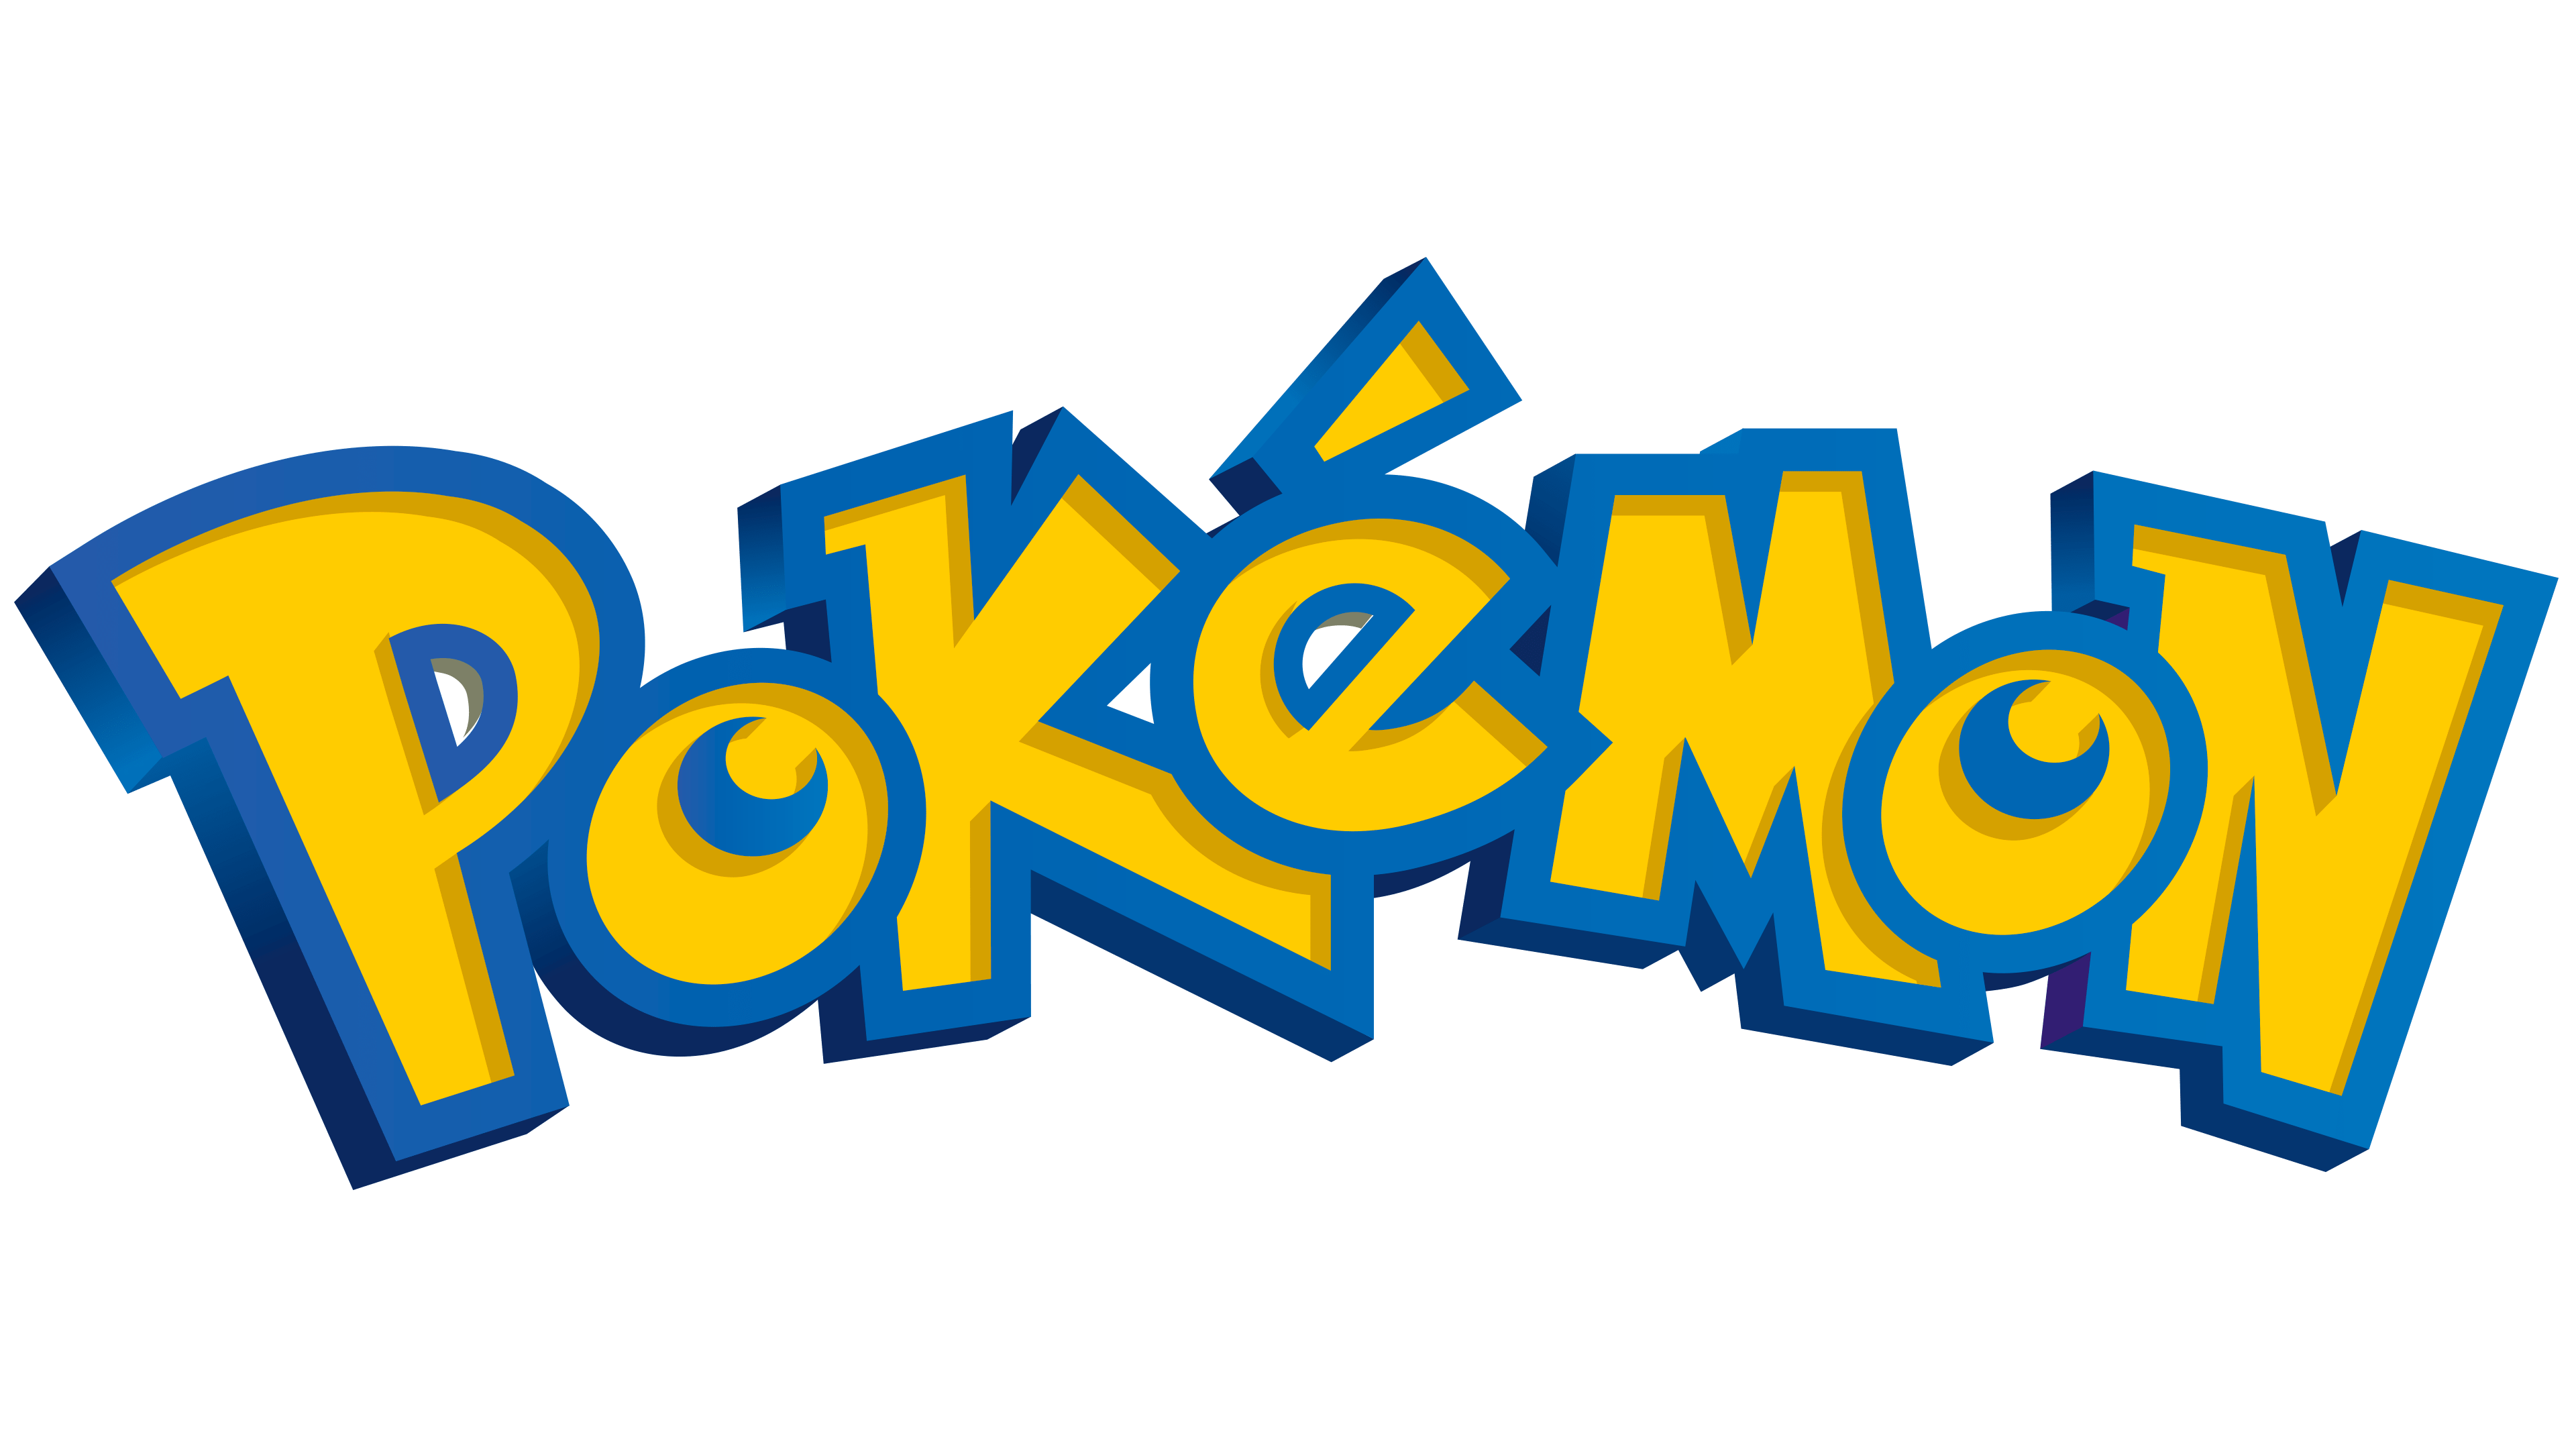 Reshiram (Pokémon) - Bulbapedia, the community-driven Pokémon encyclopedia